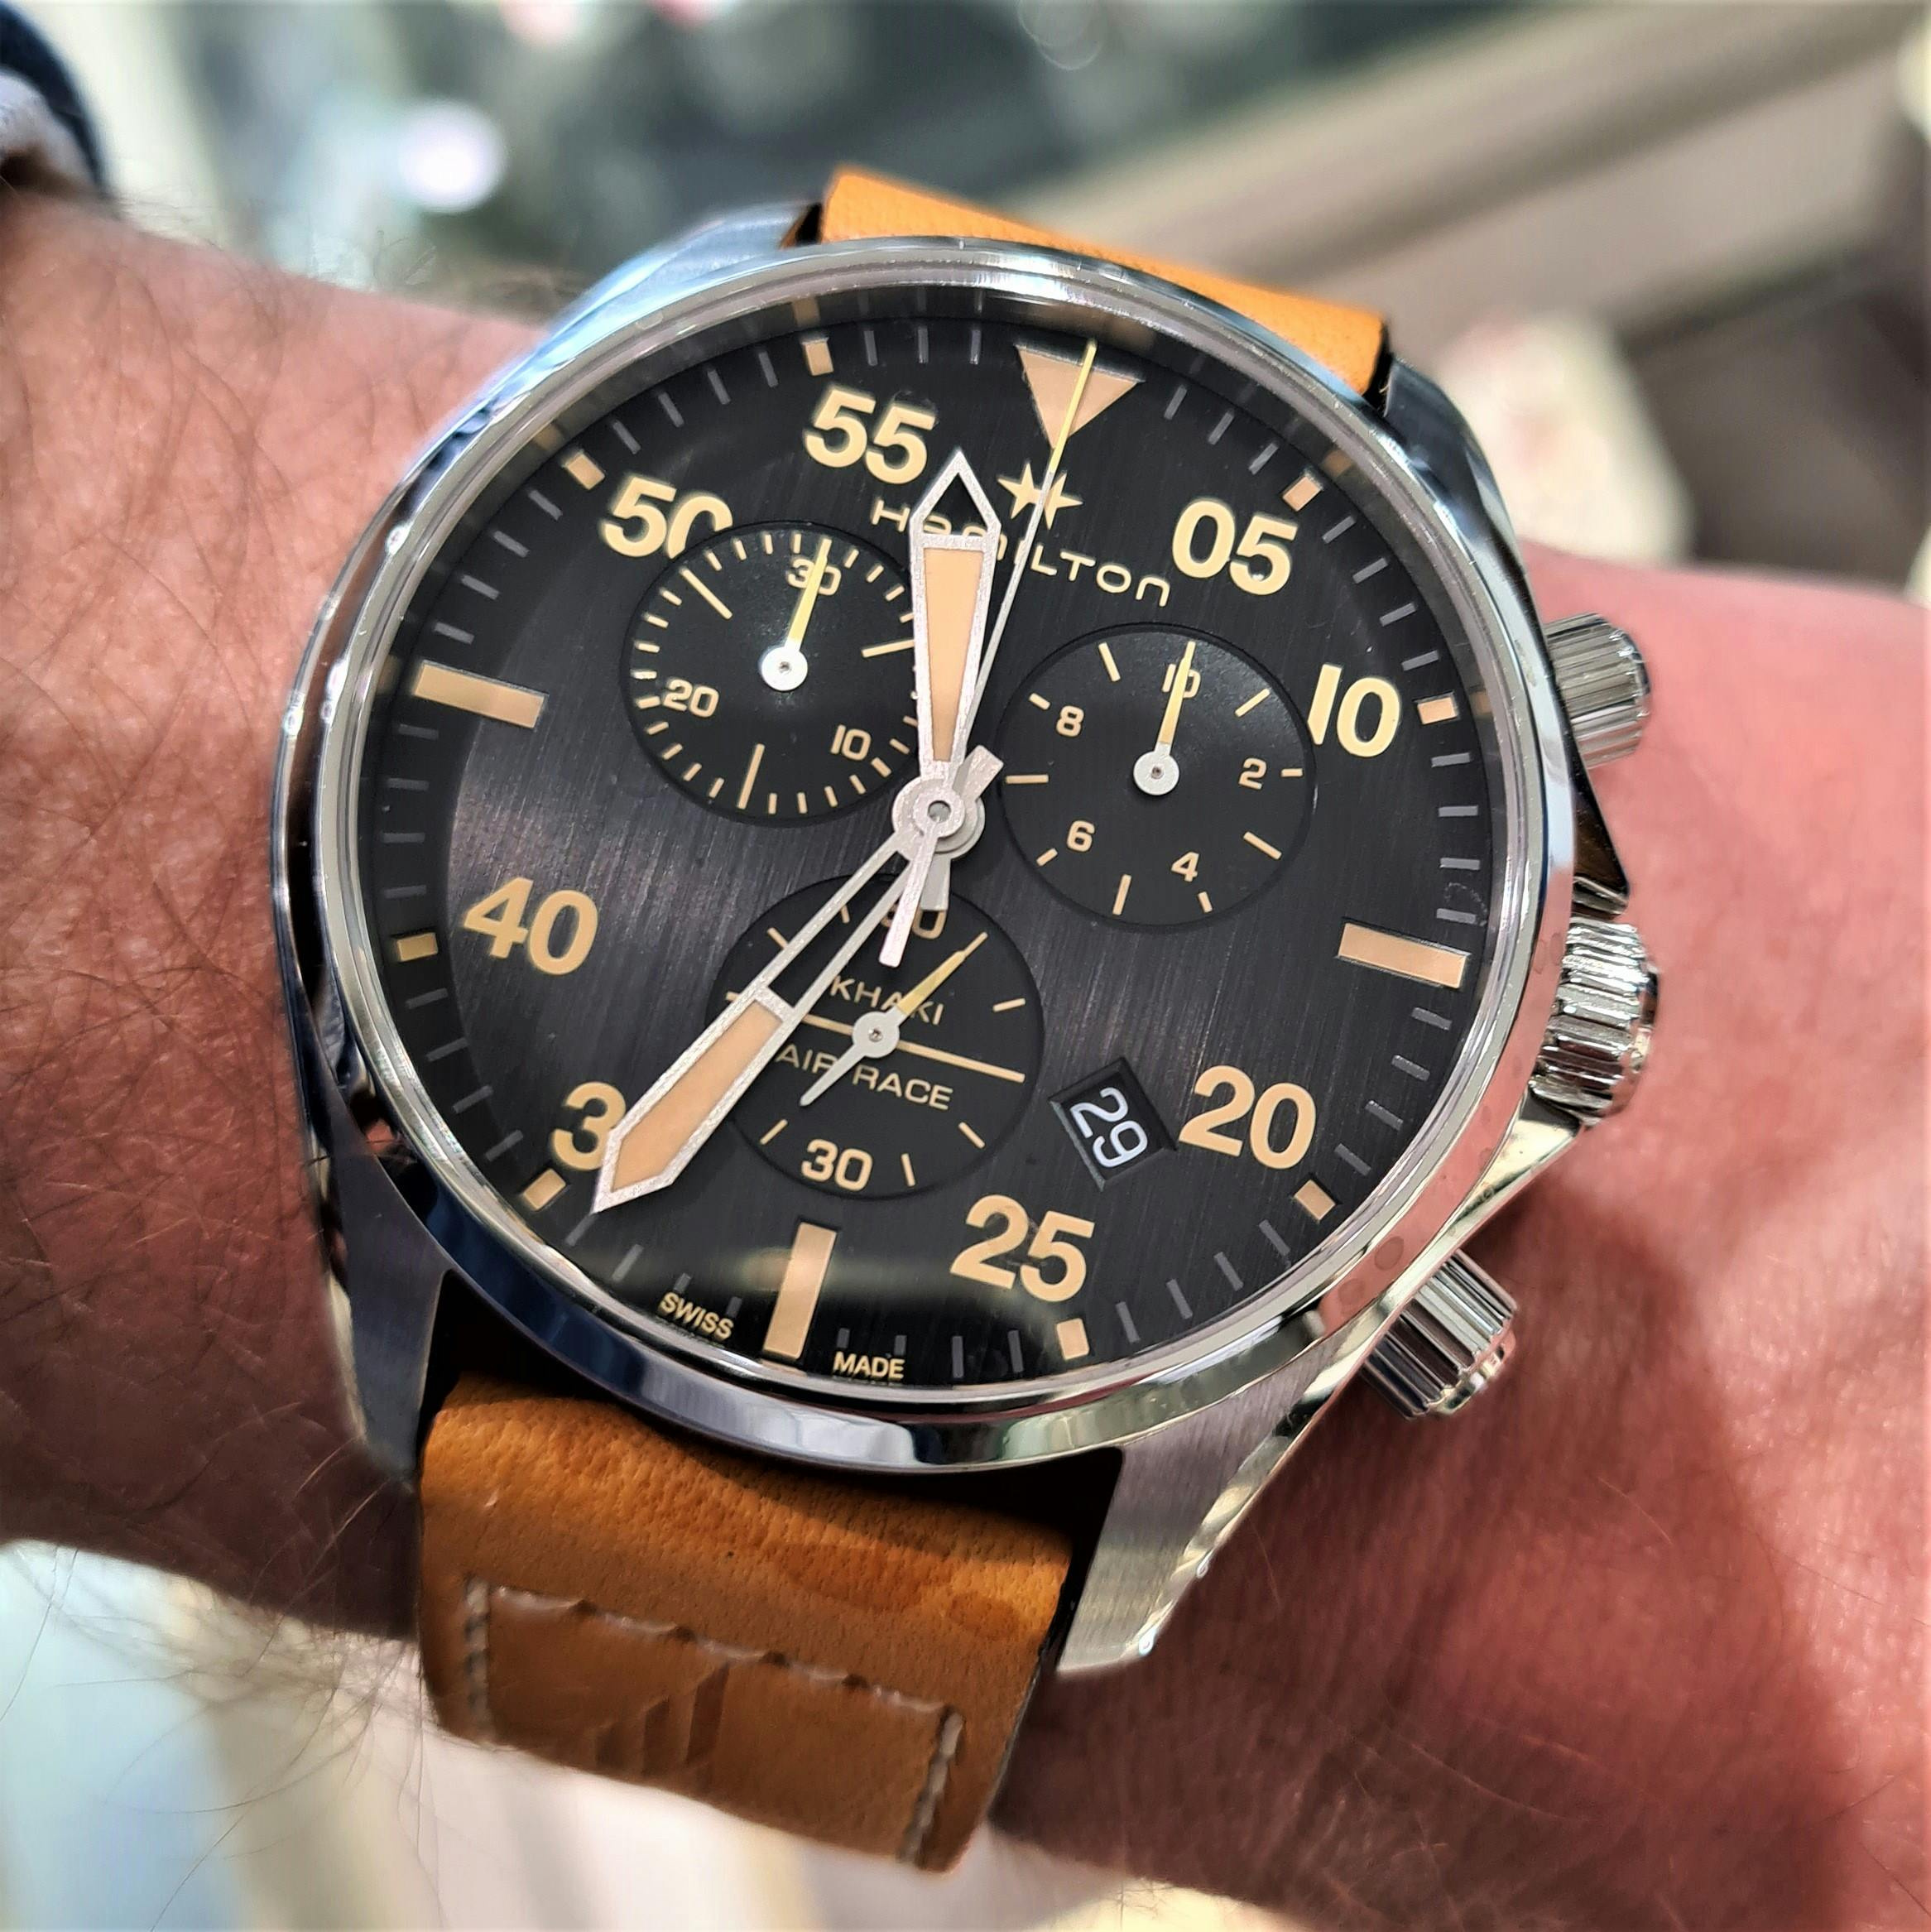 Modern Military-Inspored Pilot's Watch, the Hamilton Khaki Air Race Chronograph